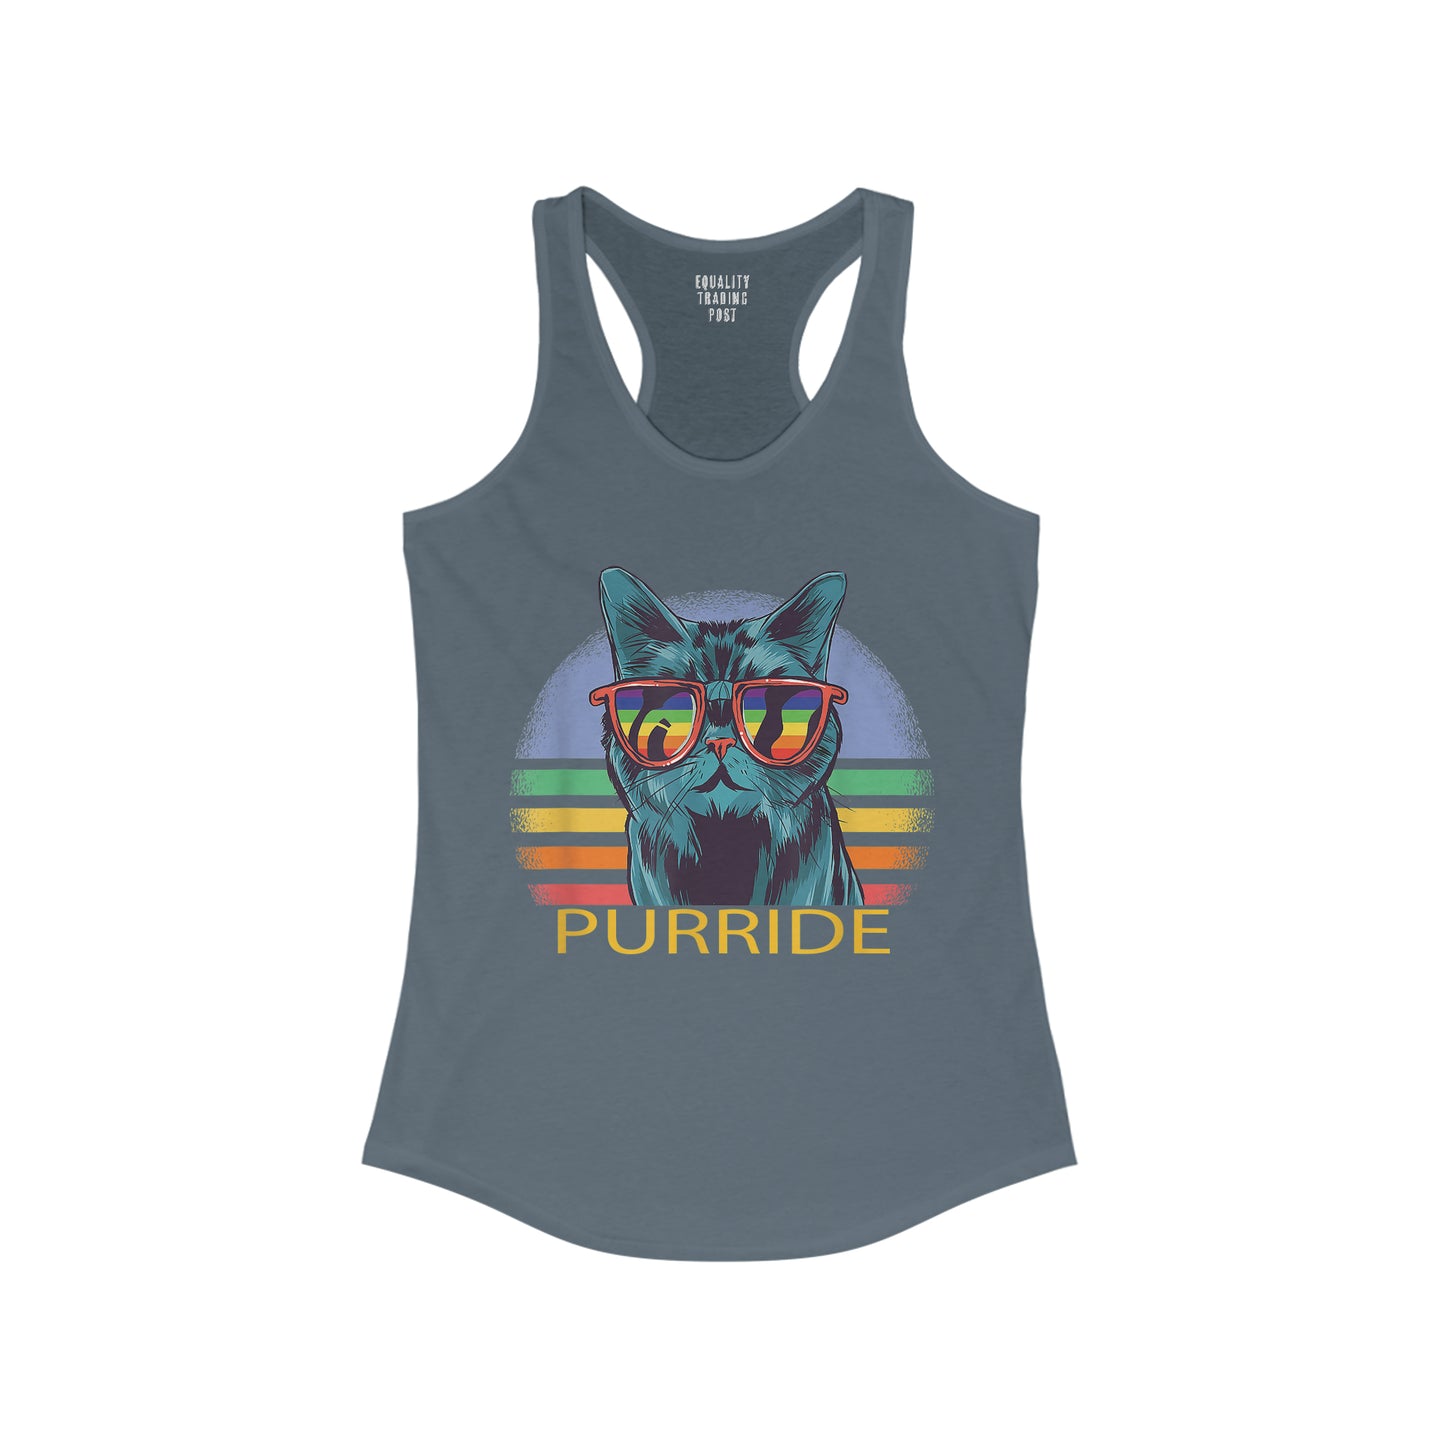 Purride Rainbow Tank Top